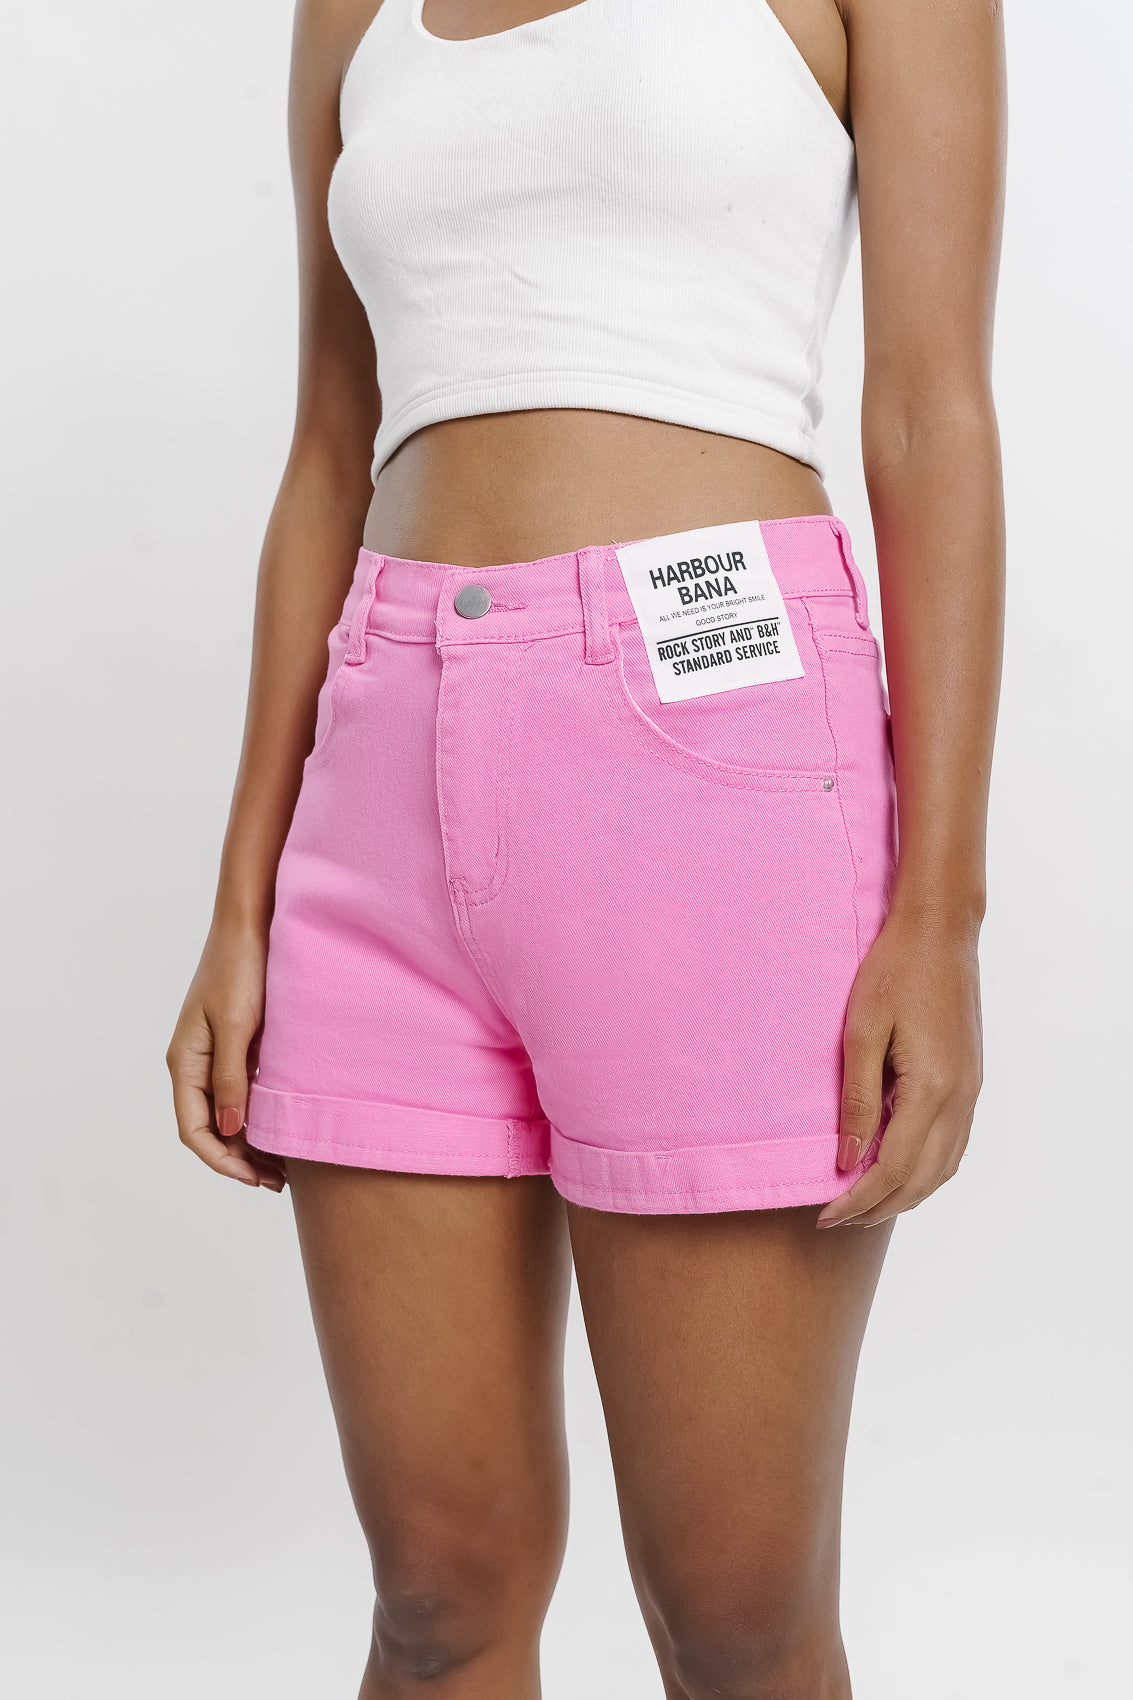 Buy Belliskey Women's Hot Pink High Rise Solid Denim Shorts (8905352007733)  at Amazon.in